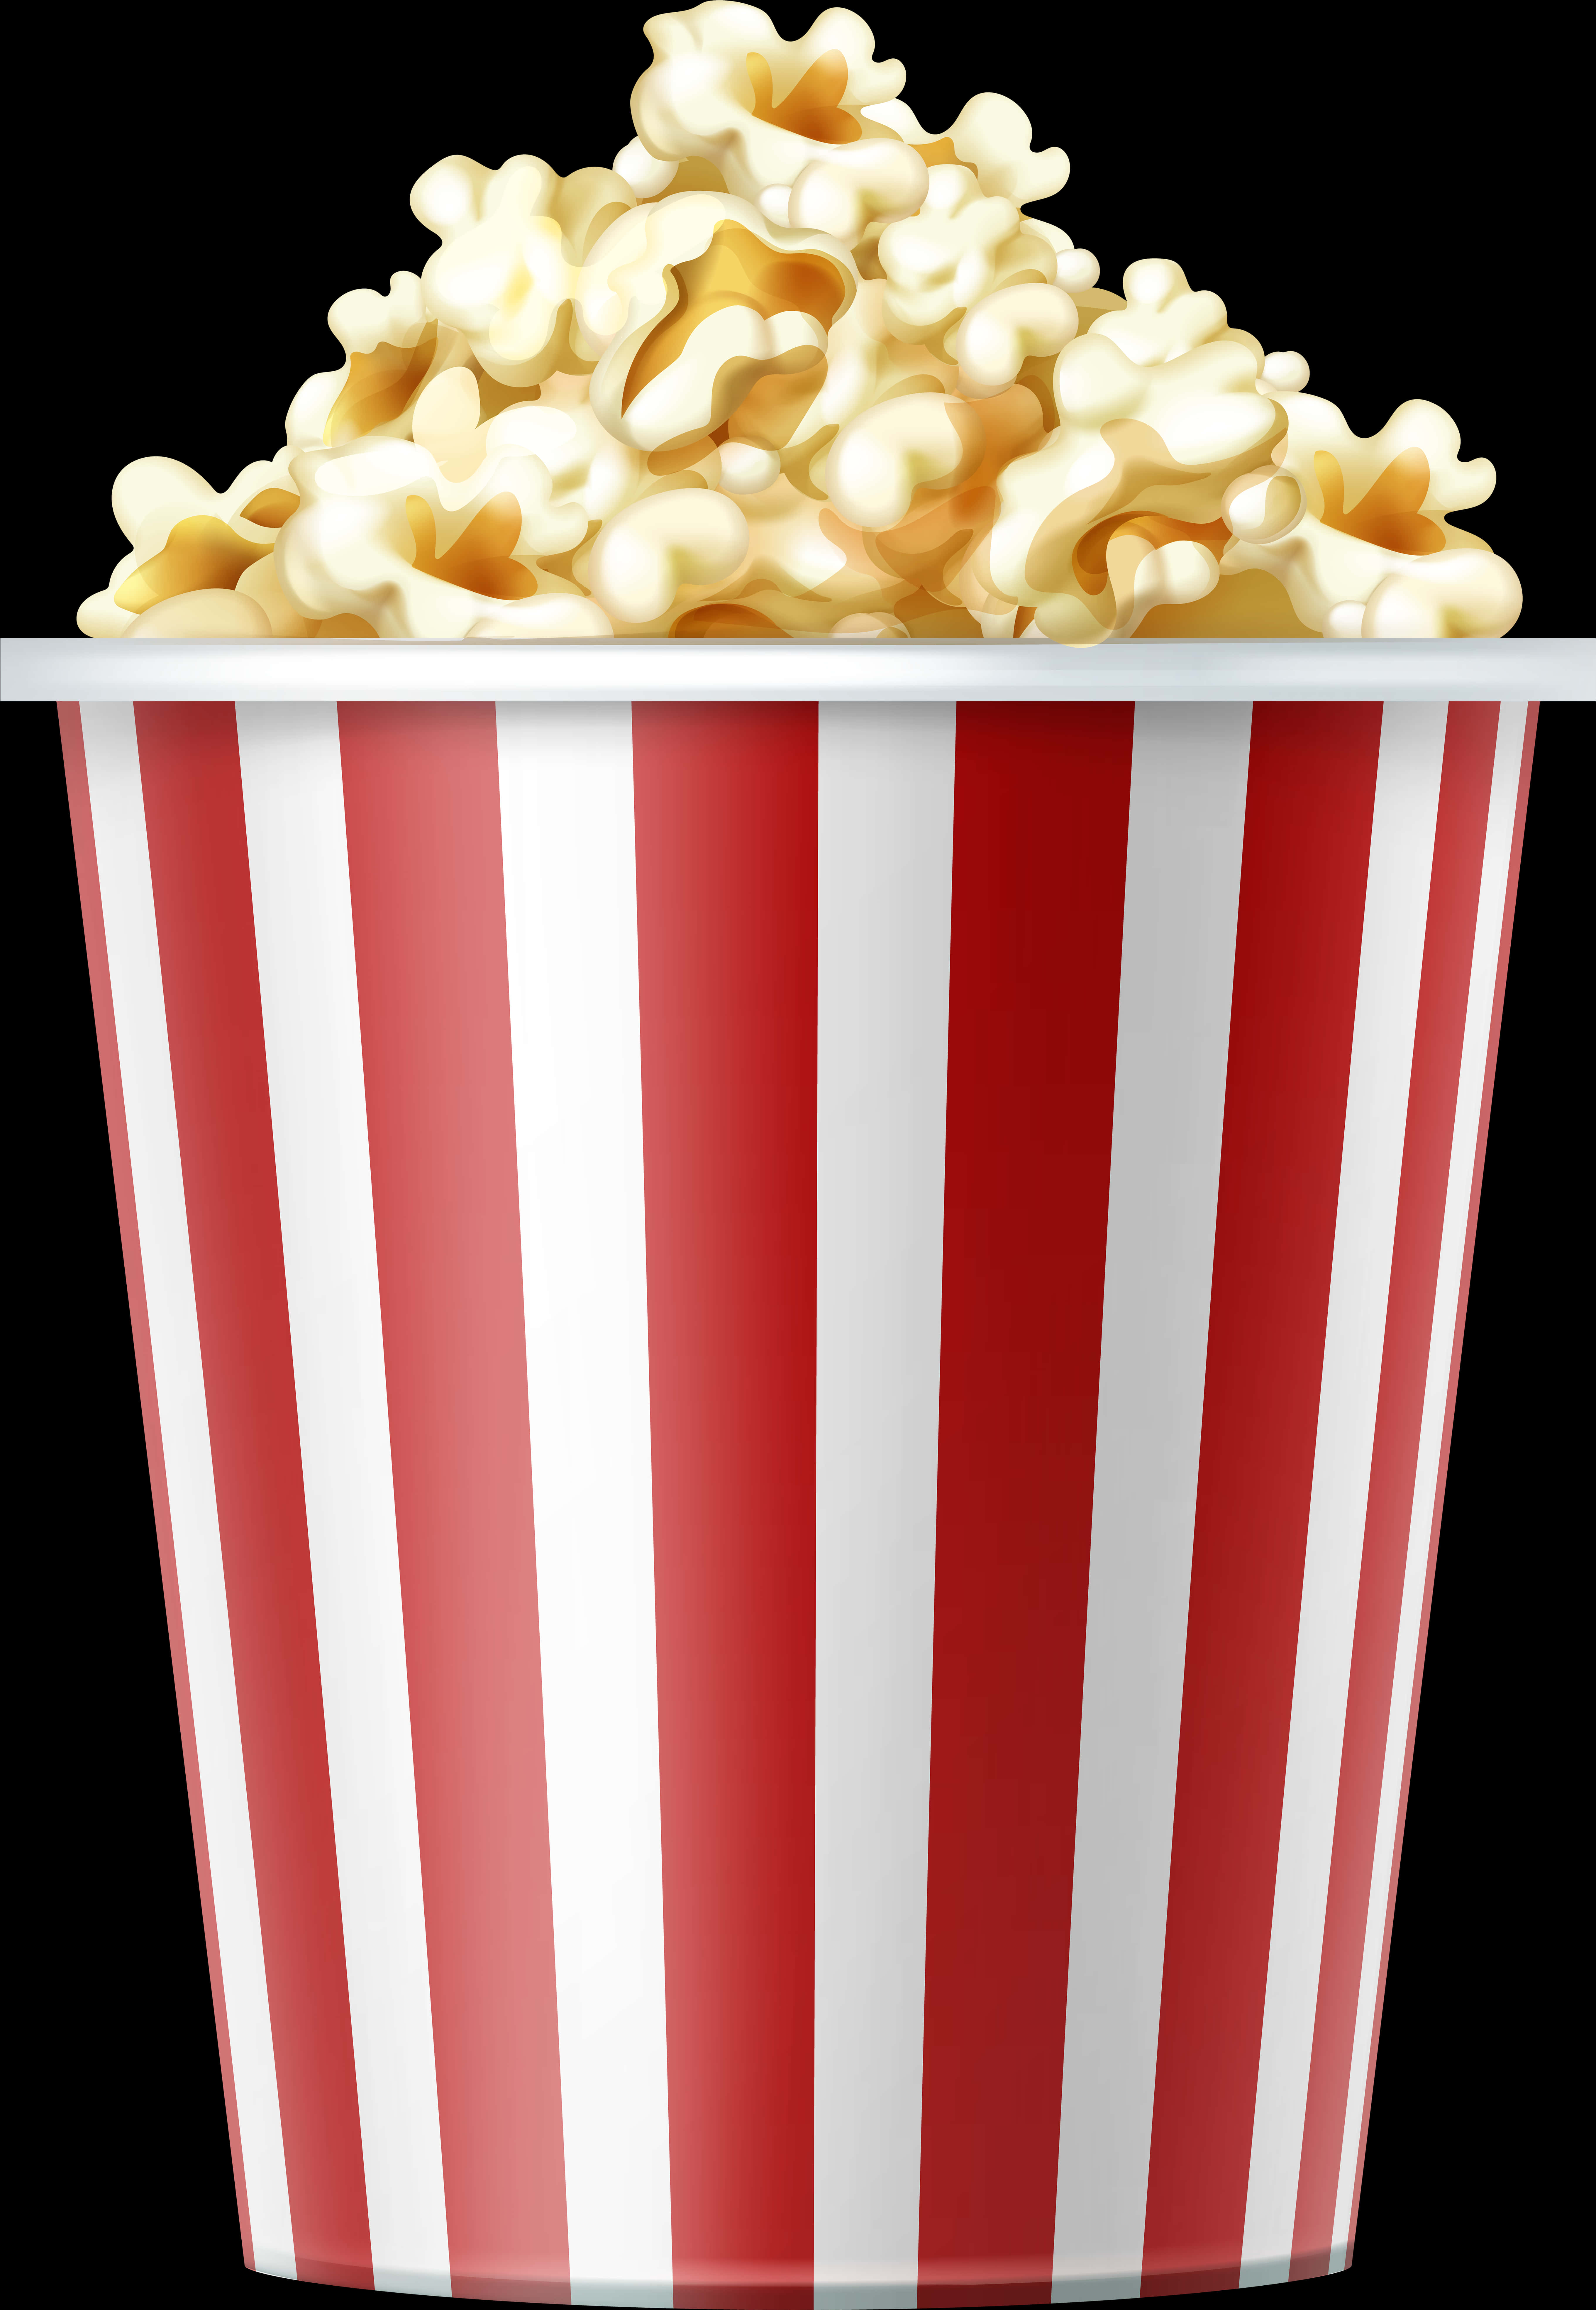 Classic Popcorn Bucket Clipart